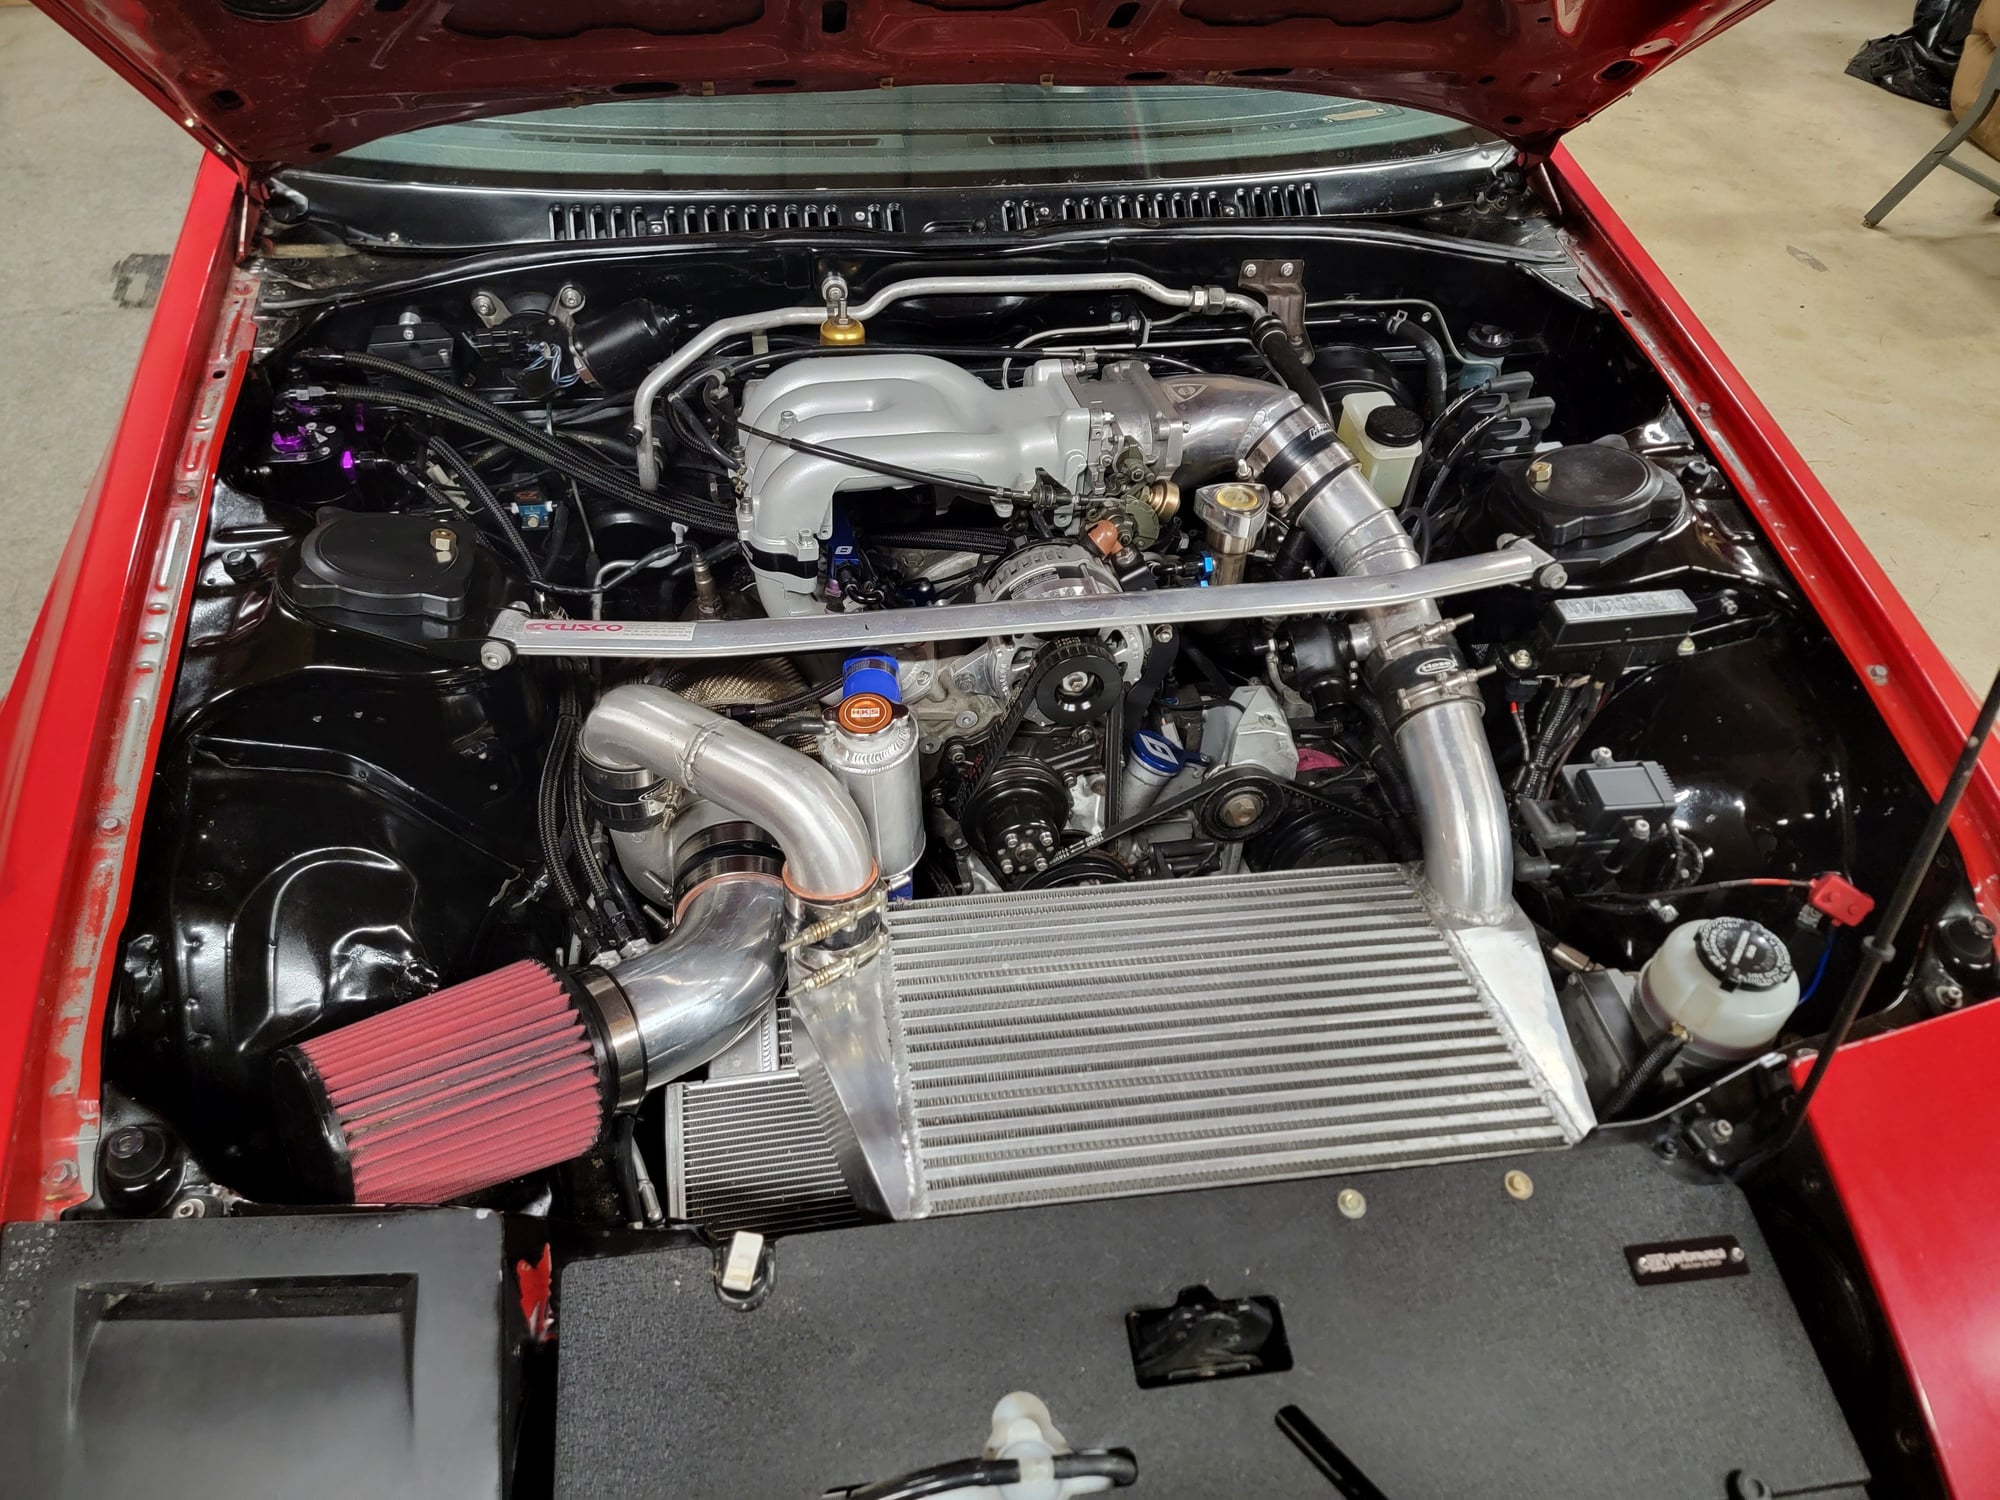 Engine - Complete - FC Turbo II drivetrain s5 - Used - West Harrison, IN 47060, United States